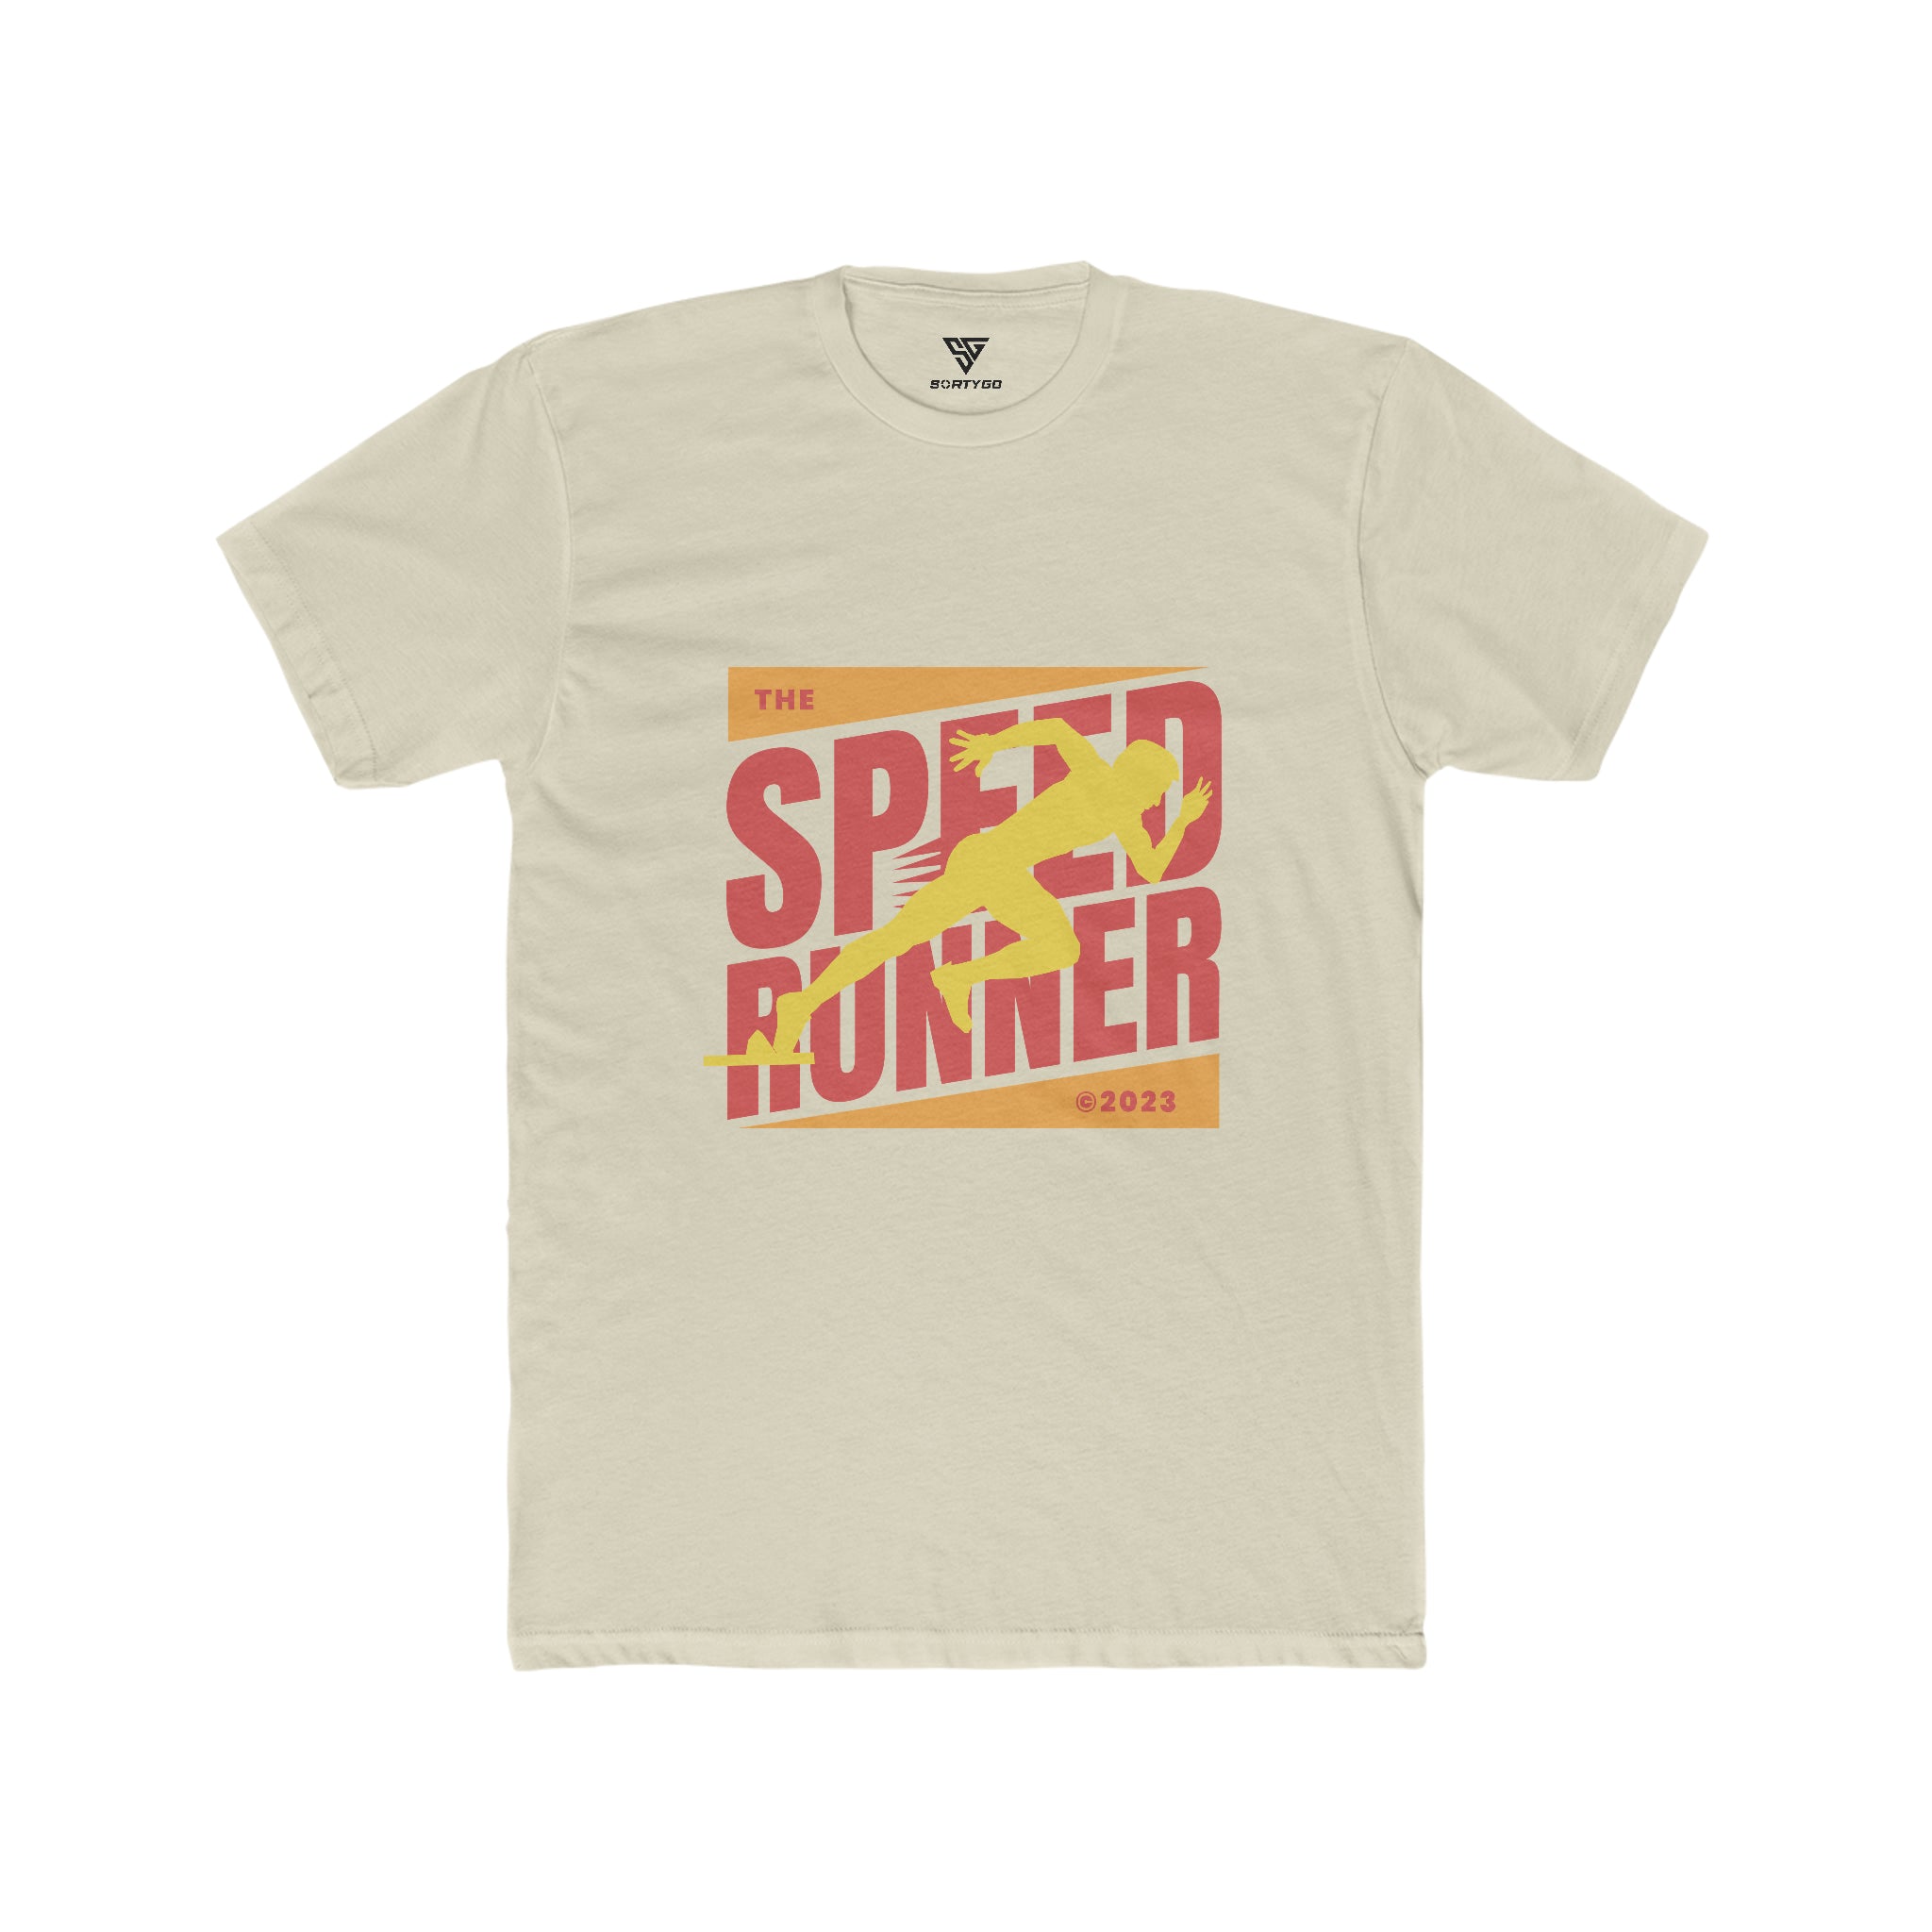 SORTYGO - Speed Runner Men Fitted T-Shirt in Solid Cream